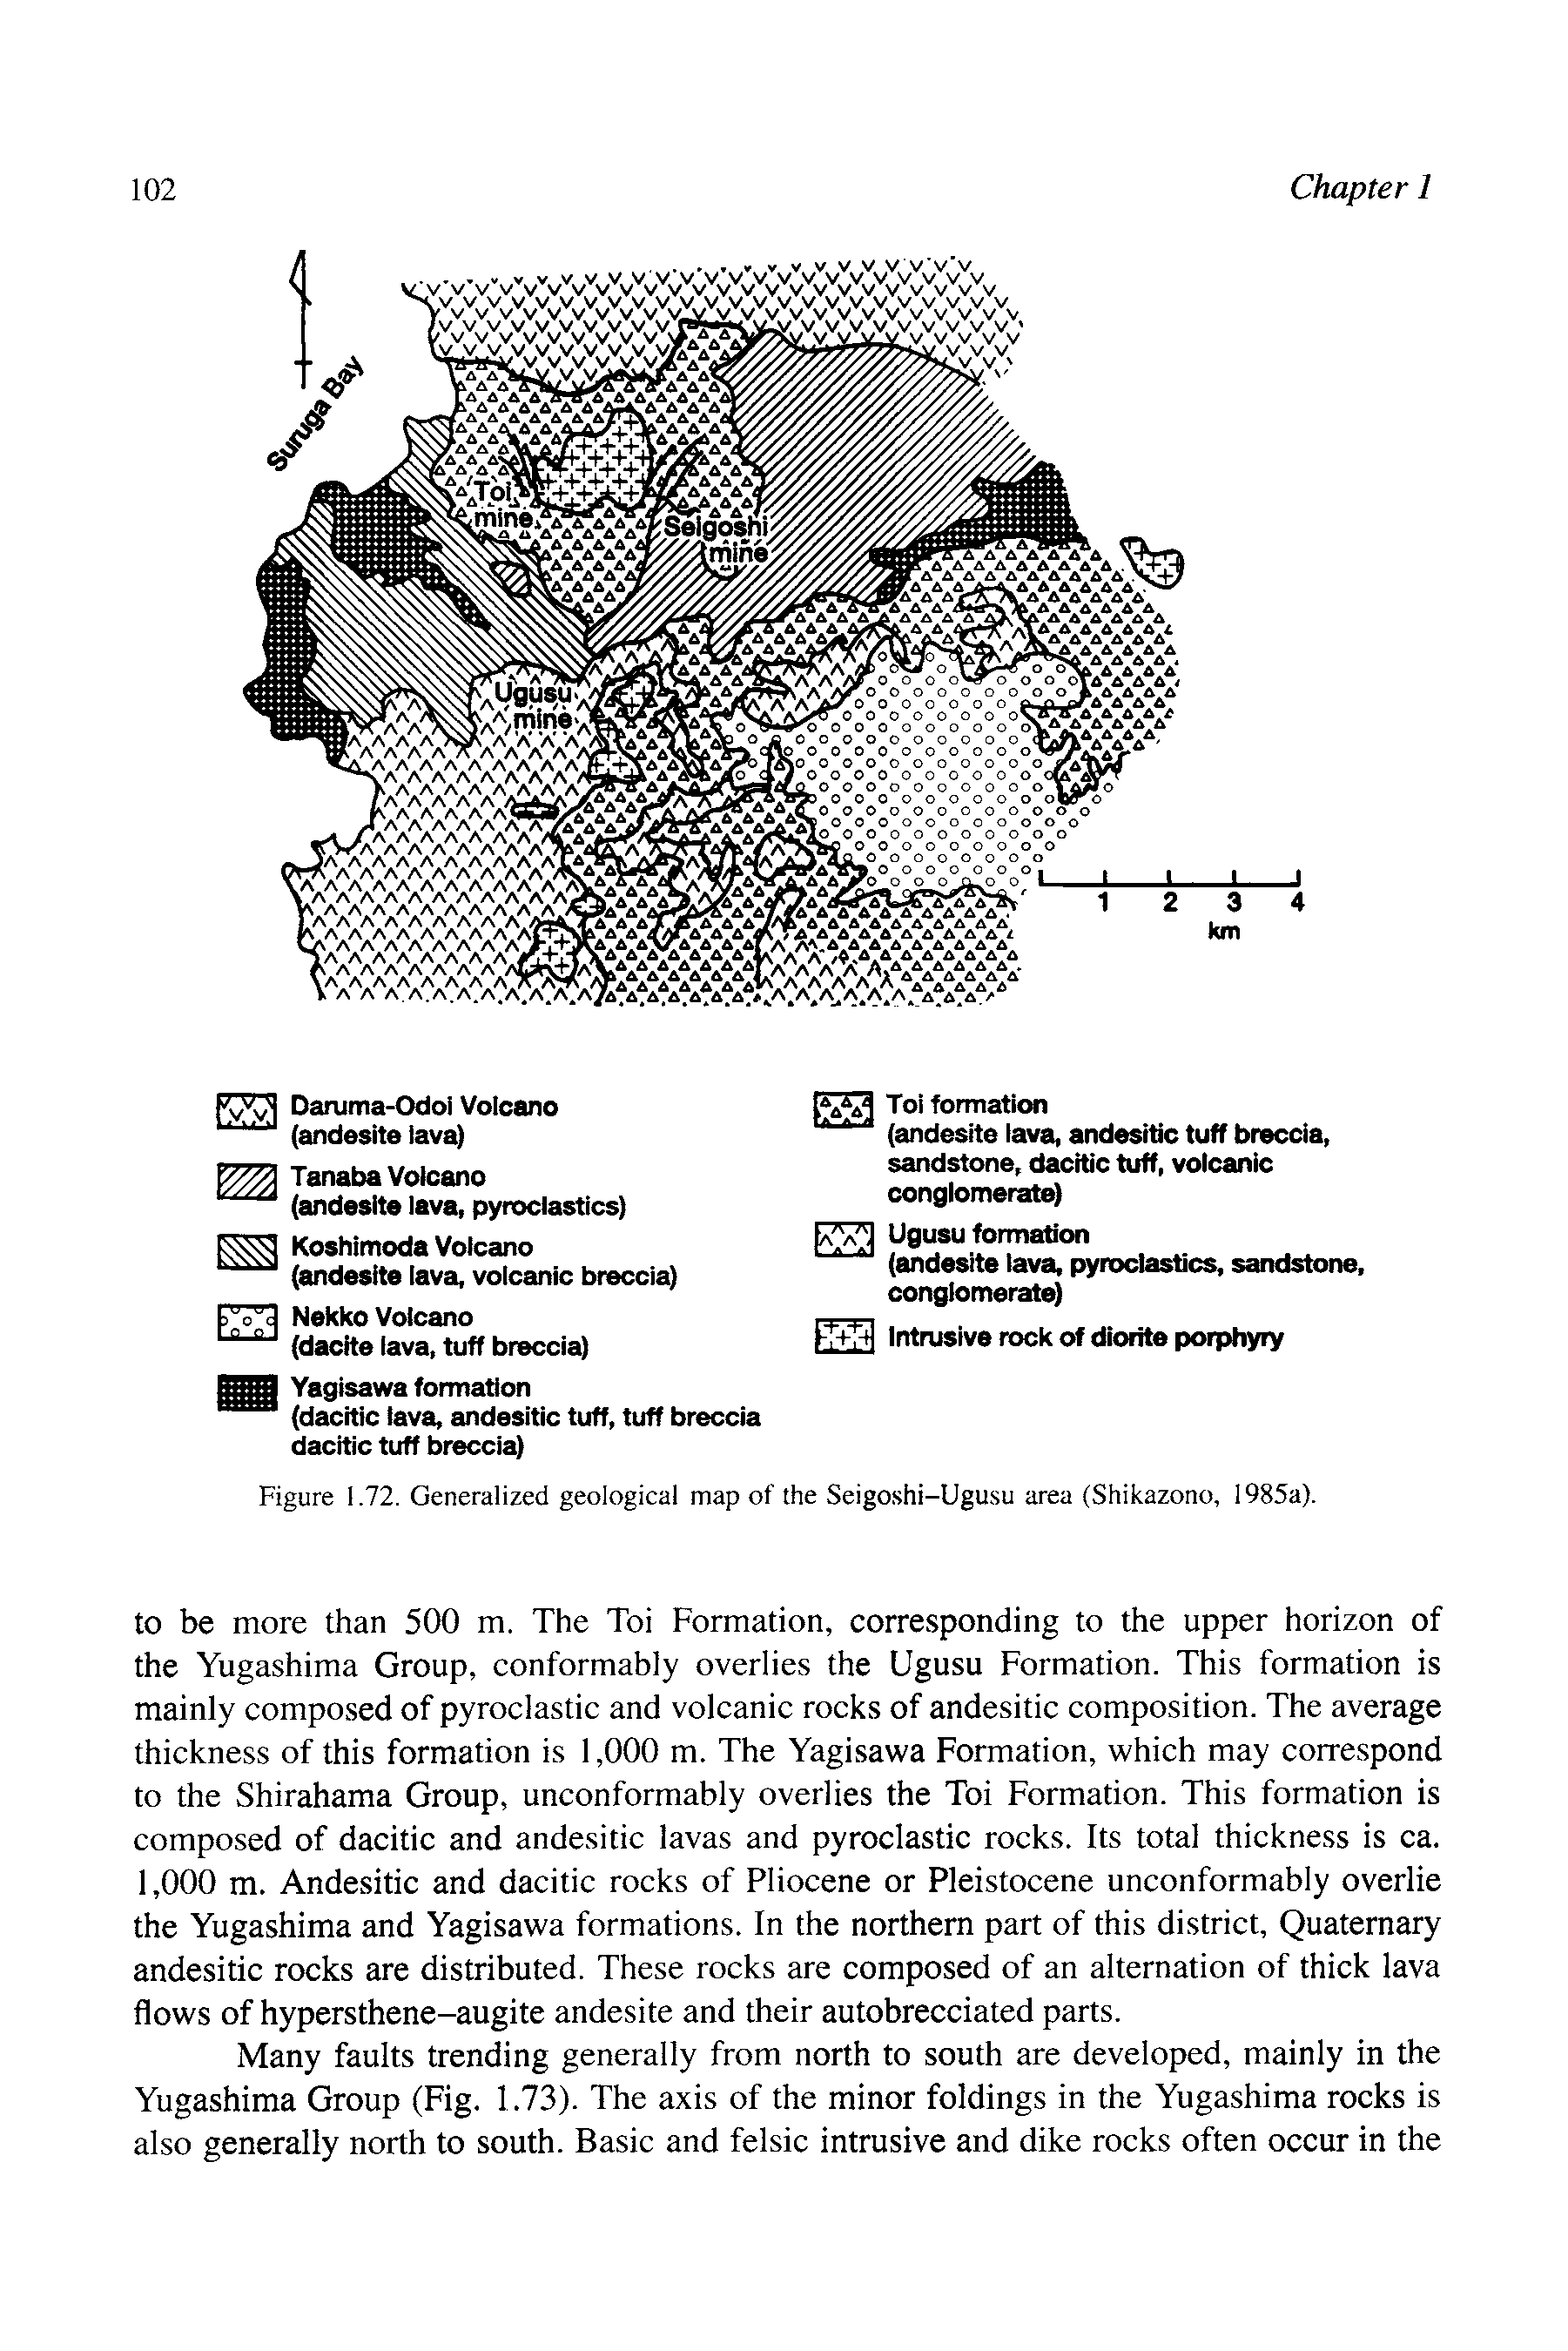 Figure 1.72. Generalized geological map of the Seigoshi-Ugusu area (Shikazono, 1985a).